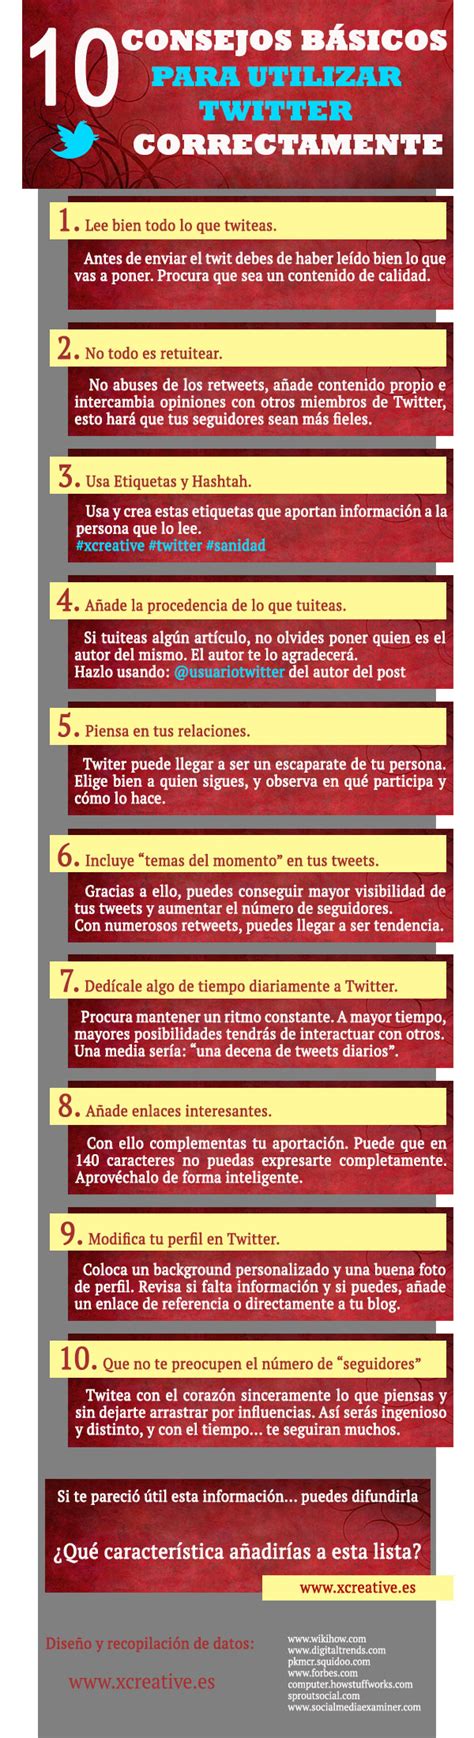 Consejos Para Usar Twitter Correctamente Infografia Infographic Socialmedia Tics Y Formaci N